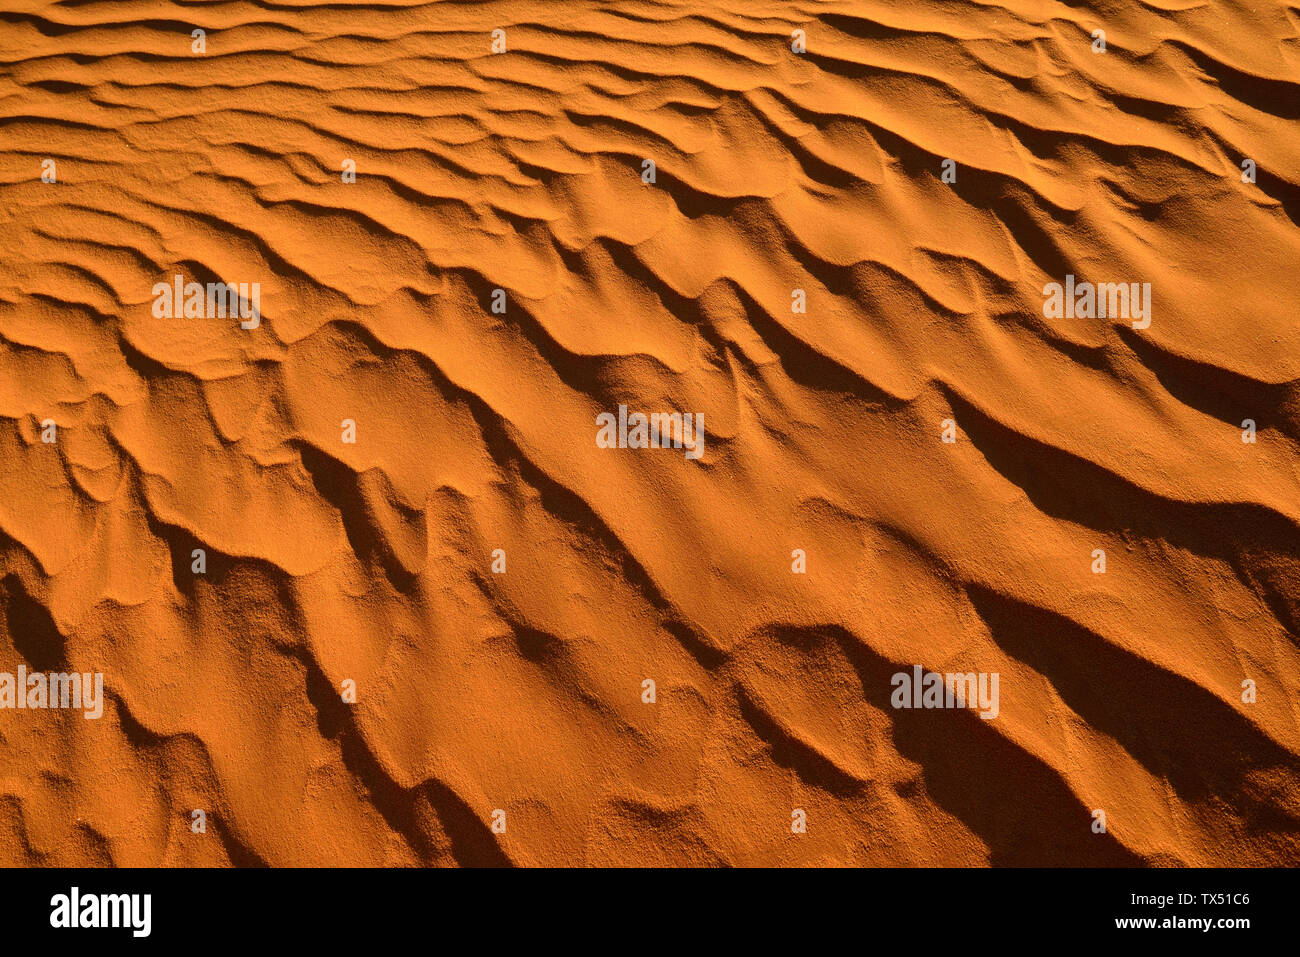 Africa, Algeria, Sahara, ripple marks, texture on a sanddune Stock Photo